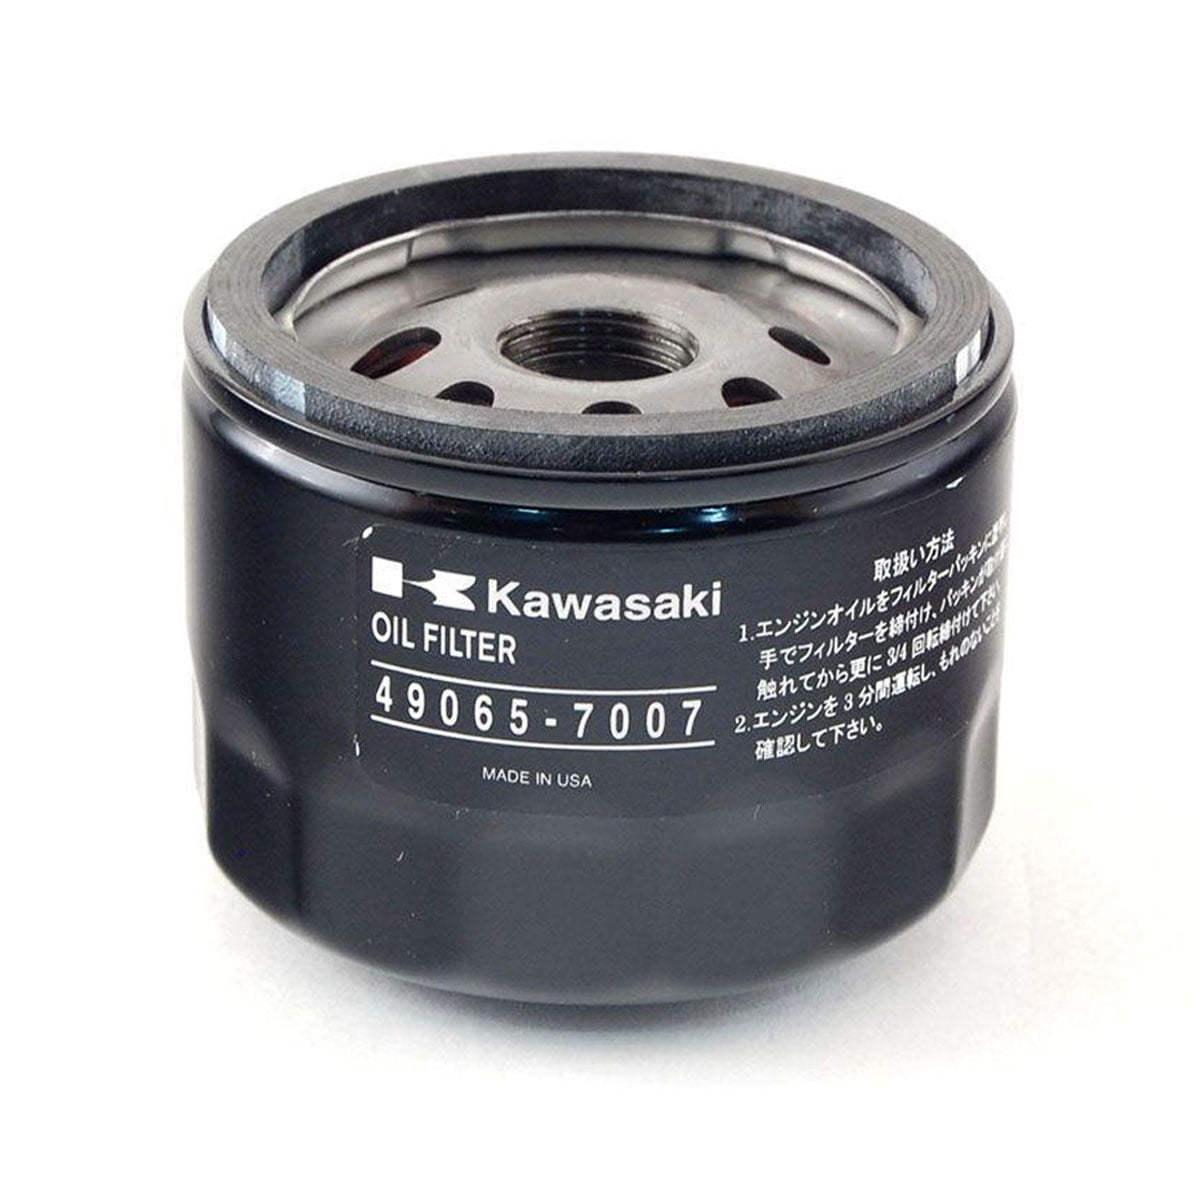 Oil Filter for Mowers Kawasaki 49065-0721 49065-7007 John Deere AM119567 13026 